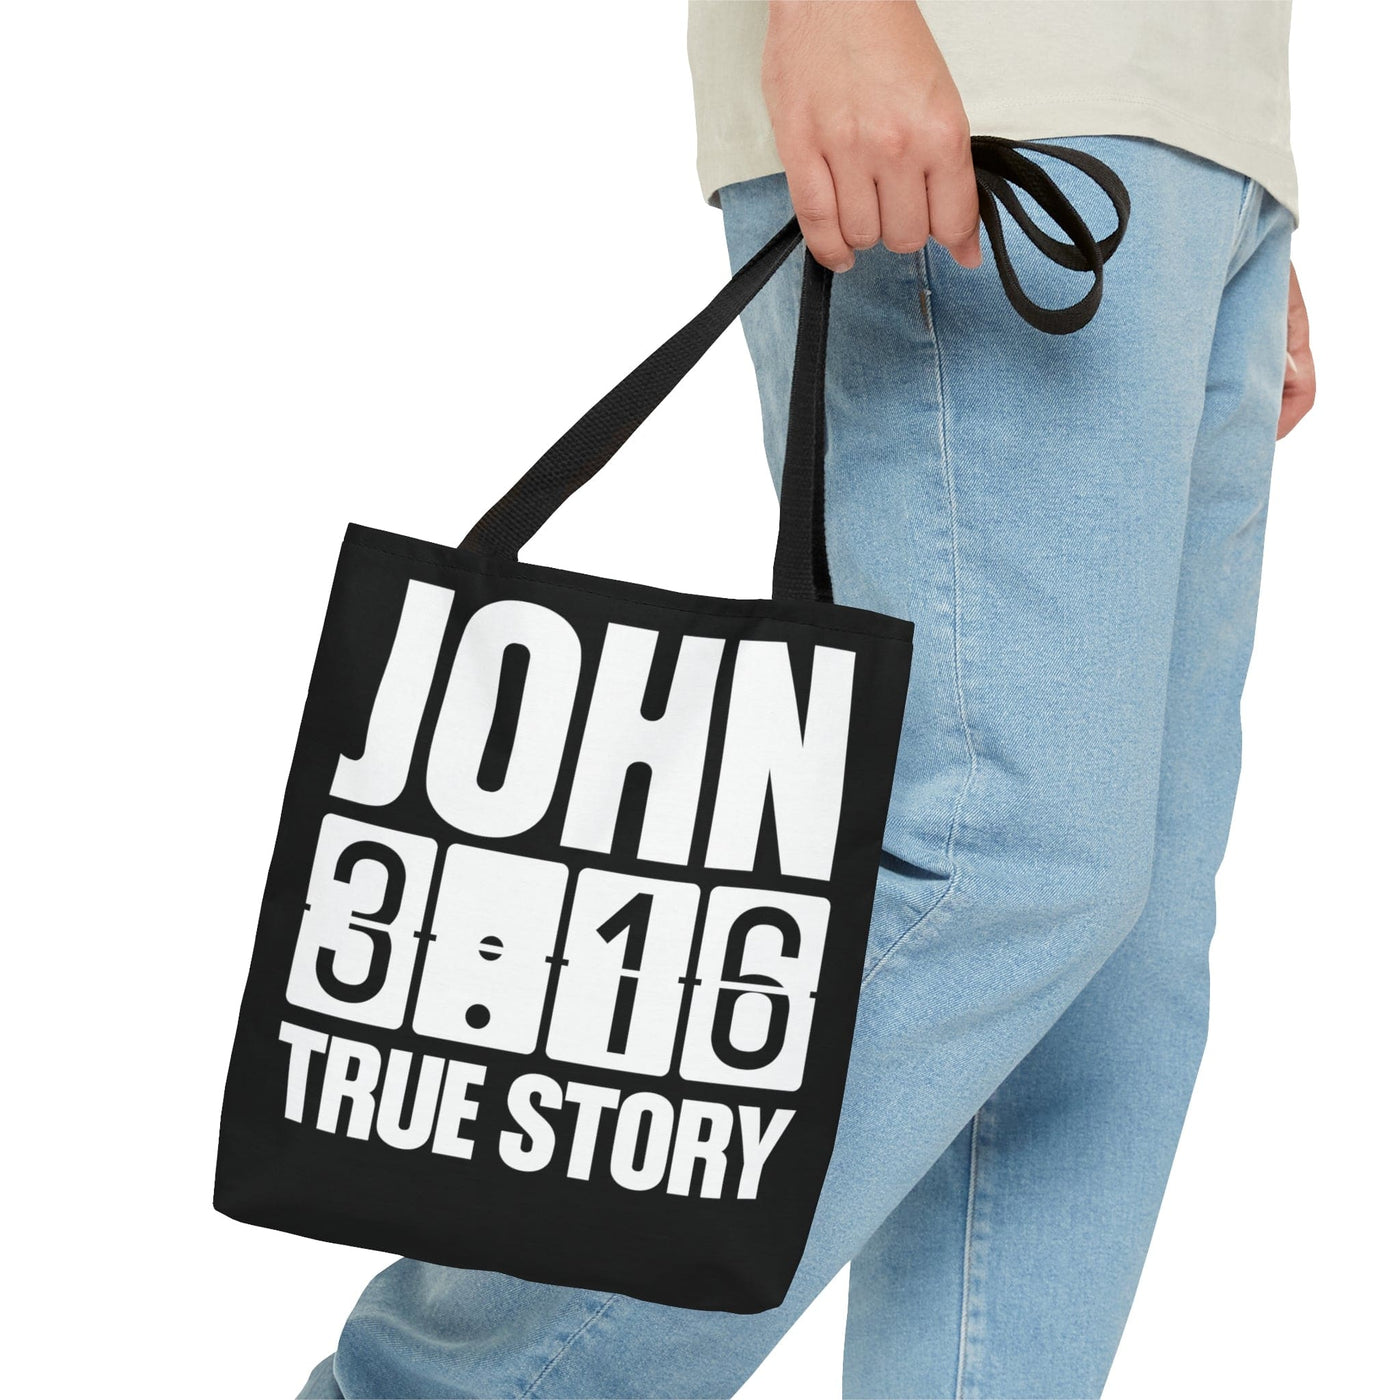 Canvas Tote Bag John 3:16 True Story - Scripture Inspiration - Bags | Canvas